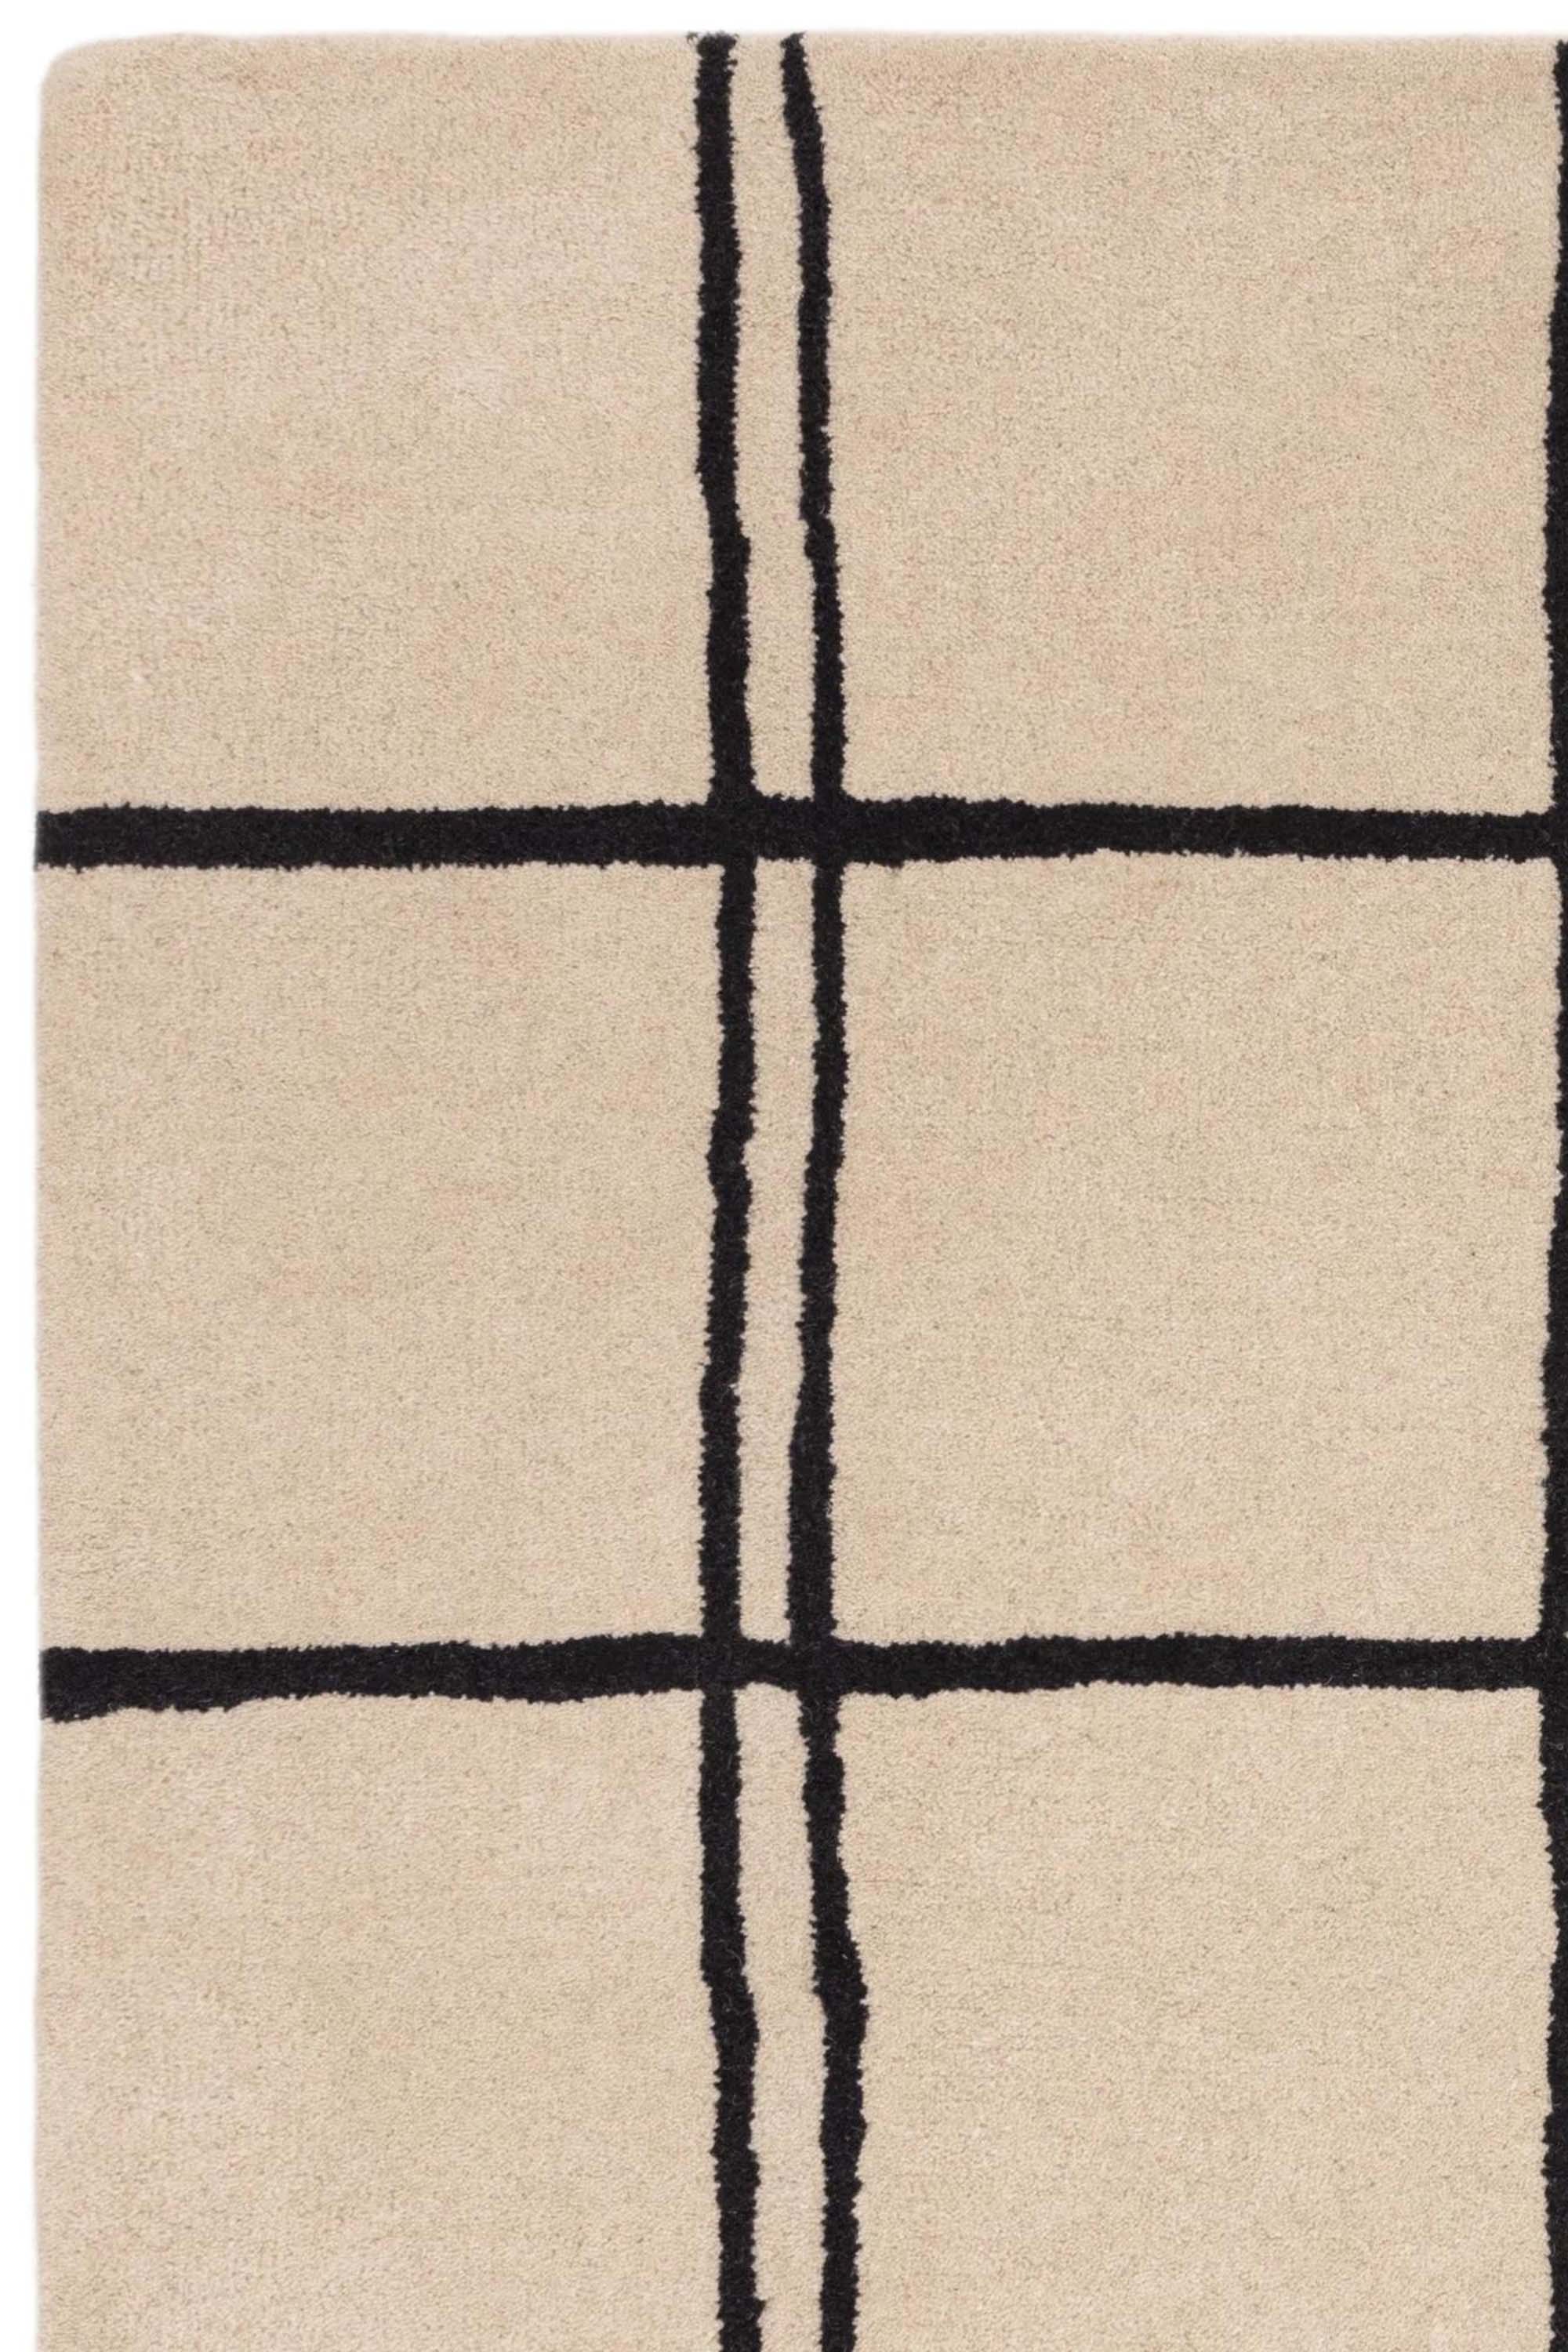 Monochrome rug with minimal geometric pattern 